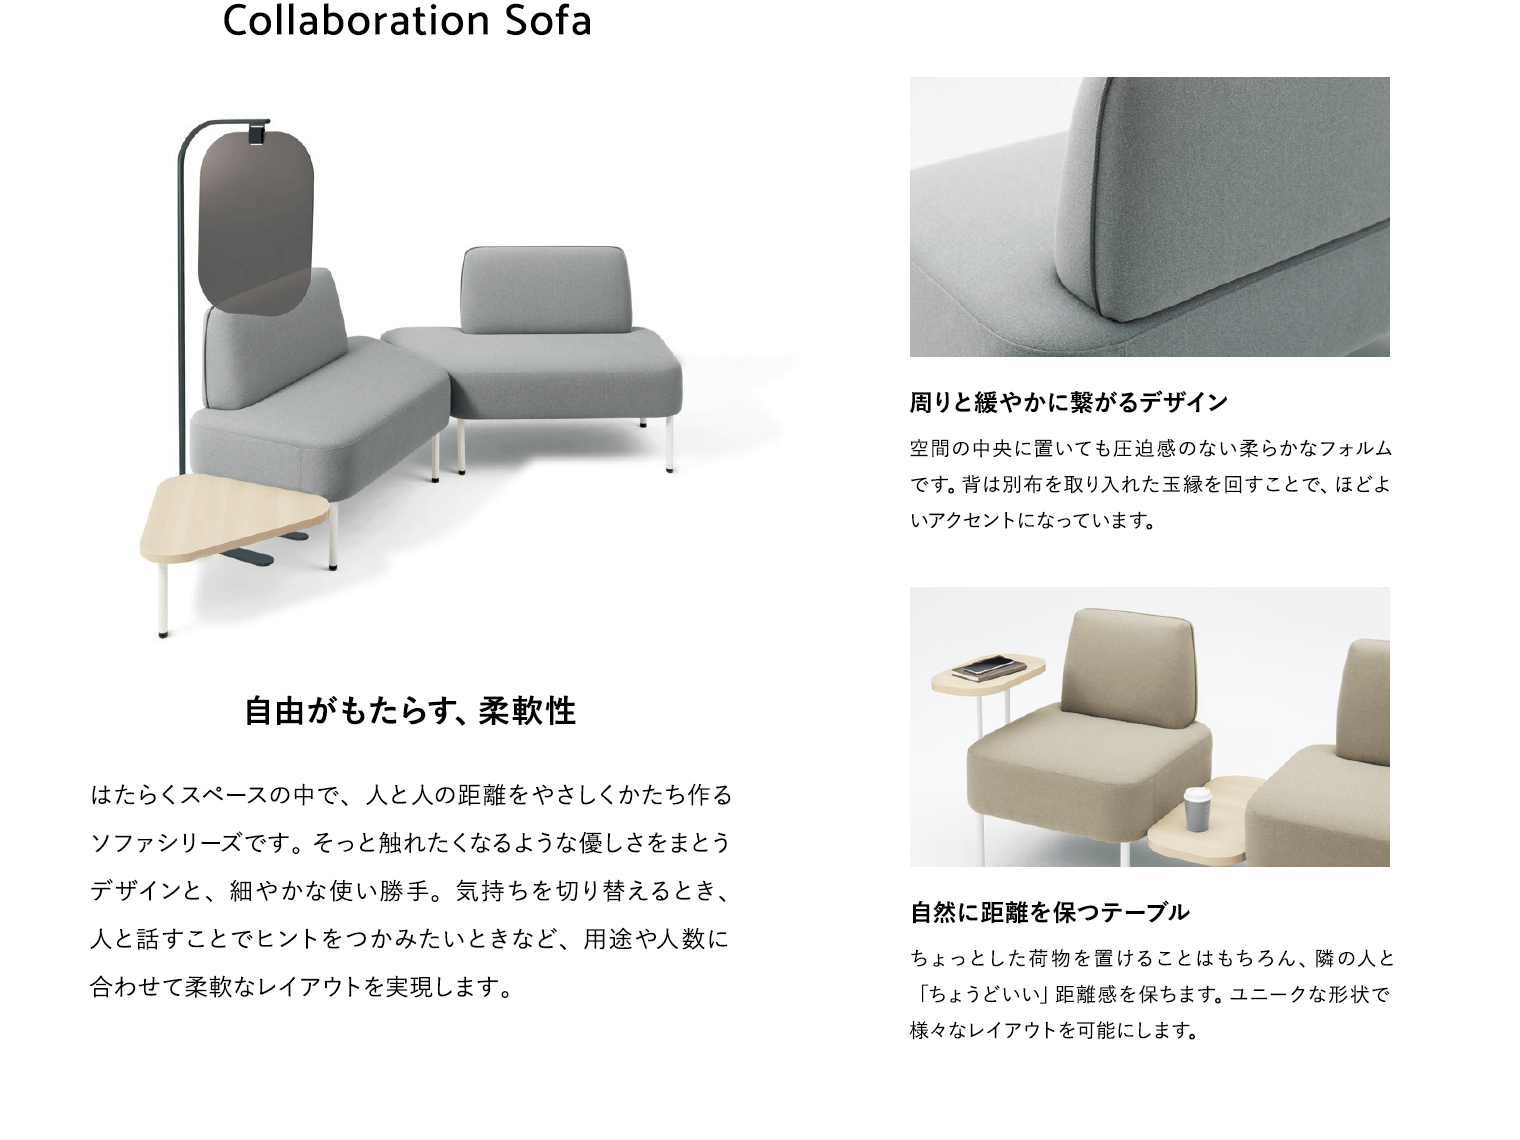 Collaboration Sofa